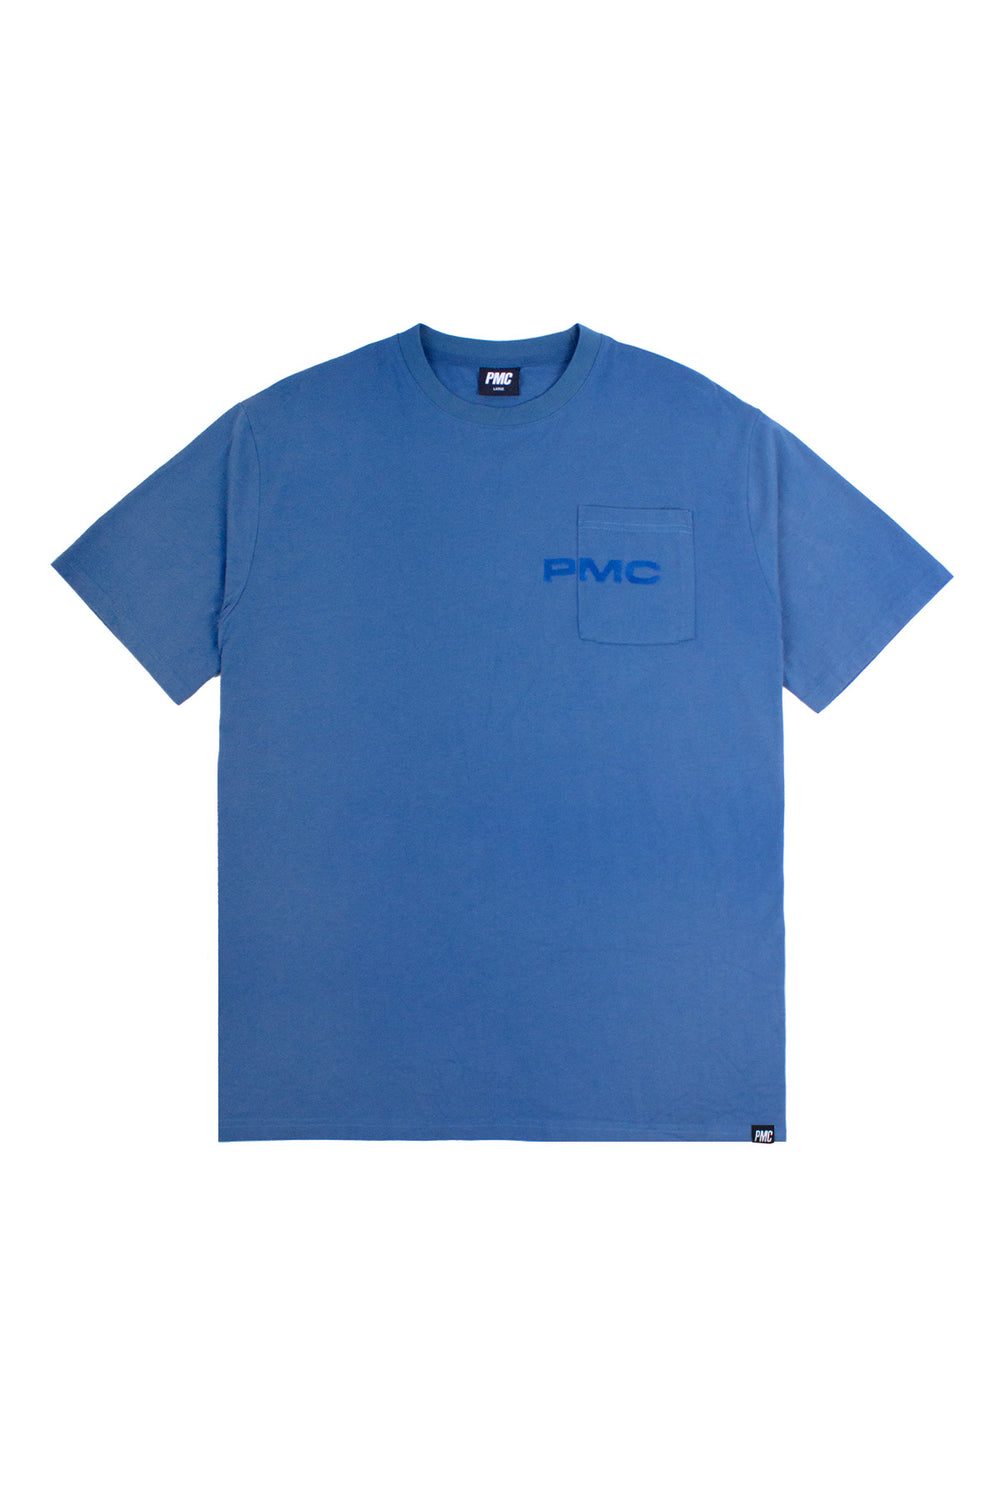 PMC | Prime Logo Flock Pocket Tee Classic Navy